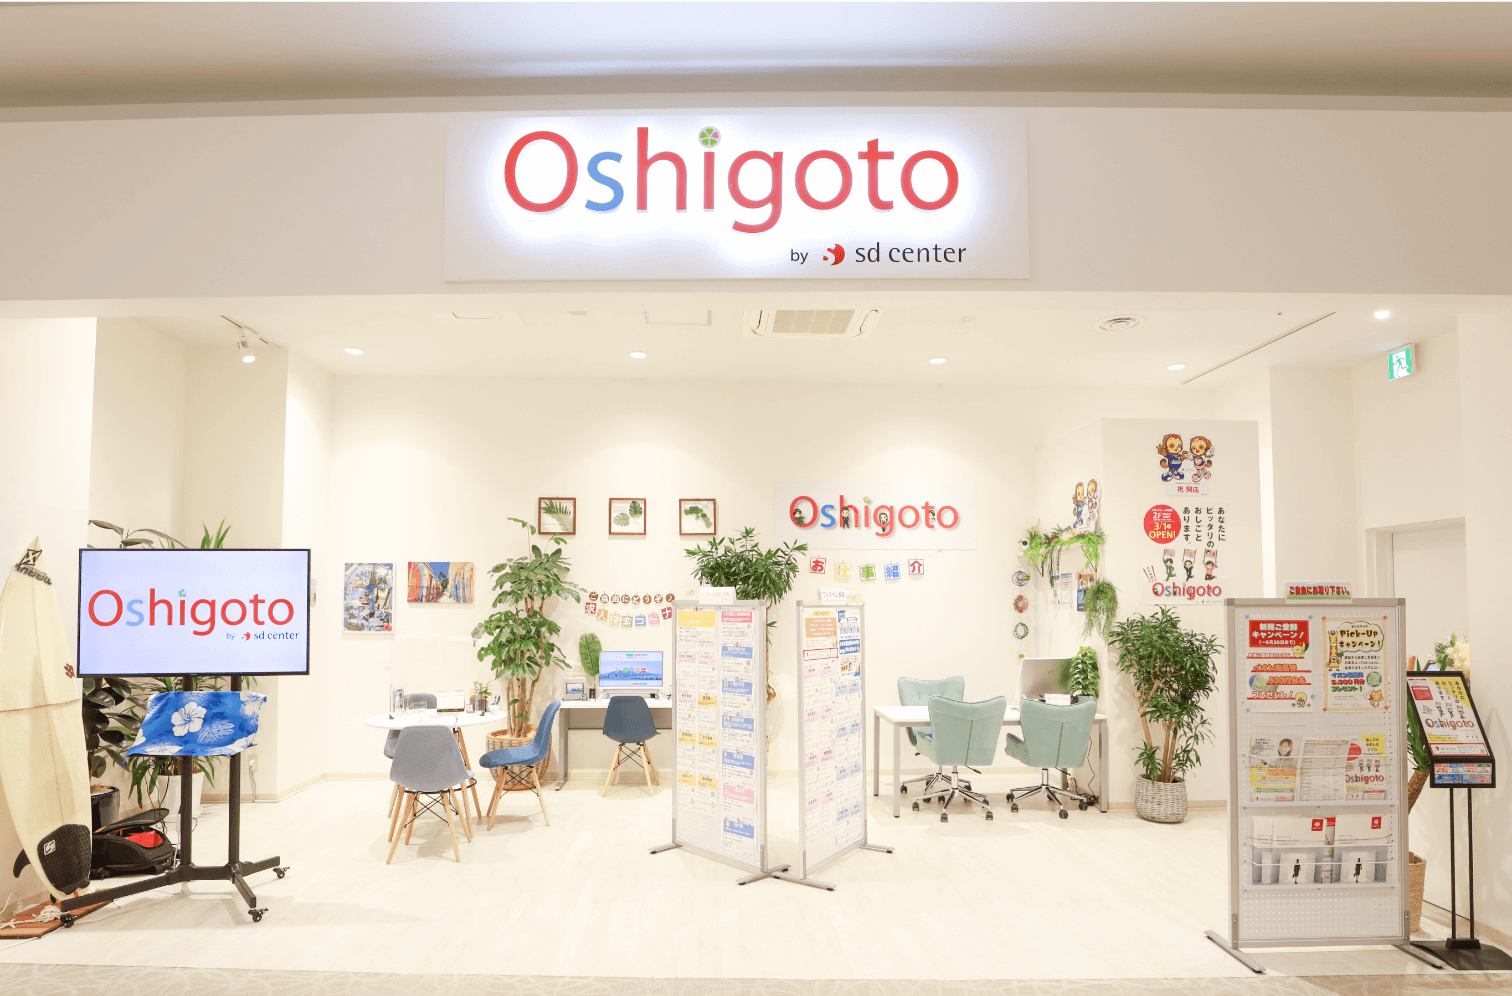 Oshigoto by sdcenter